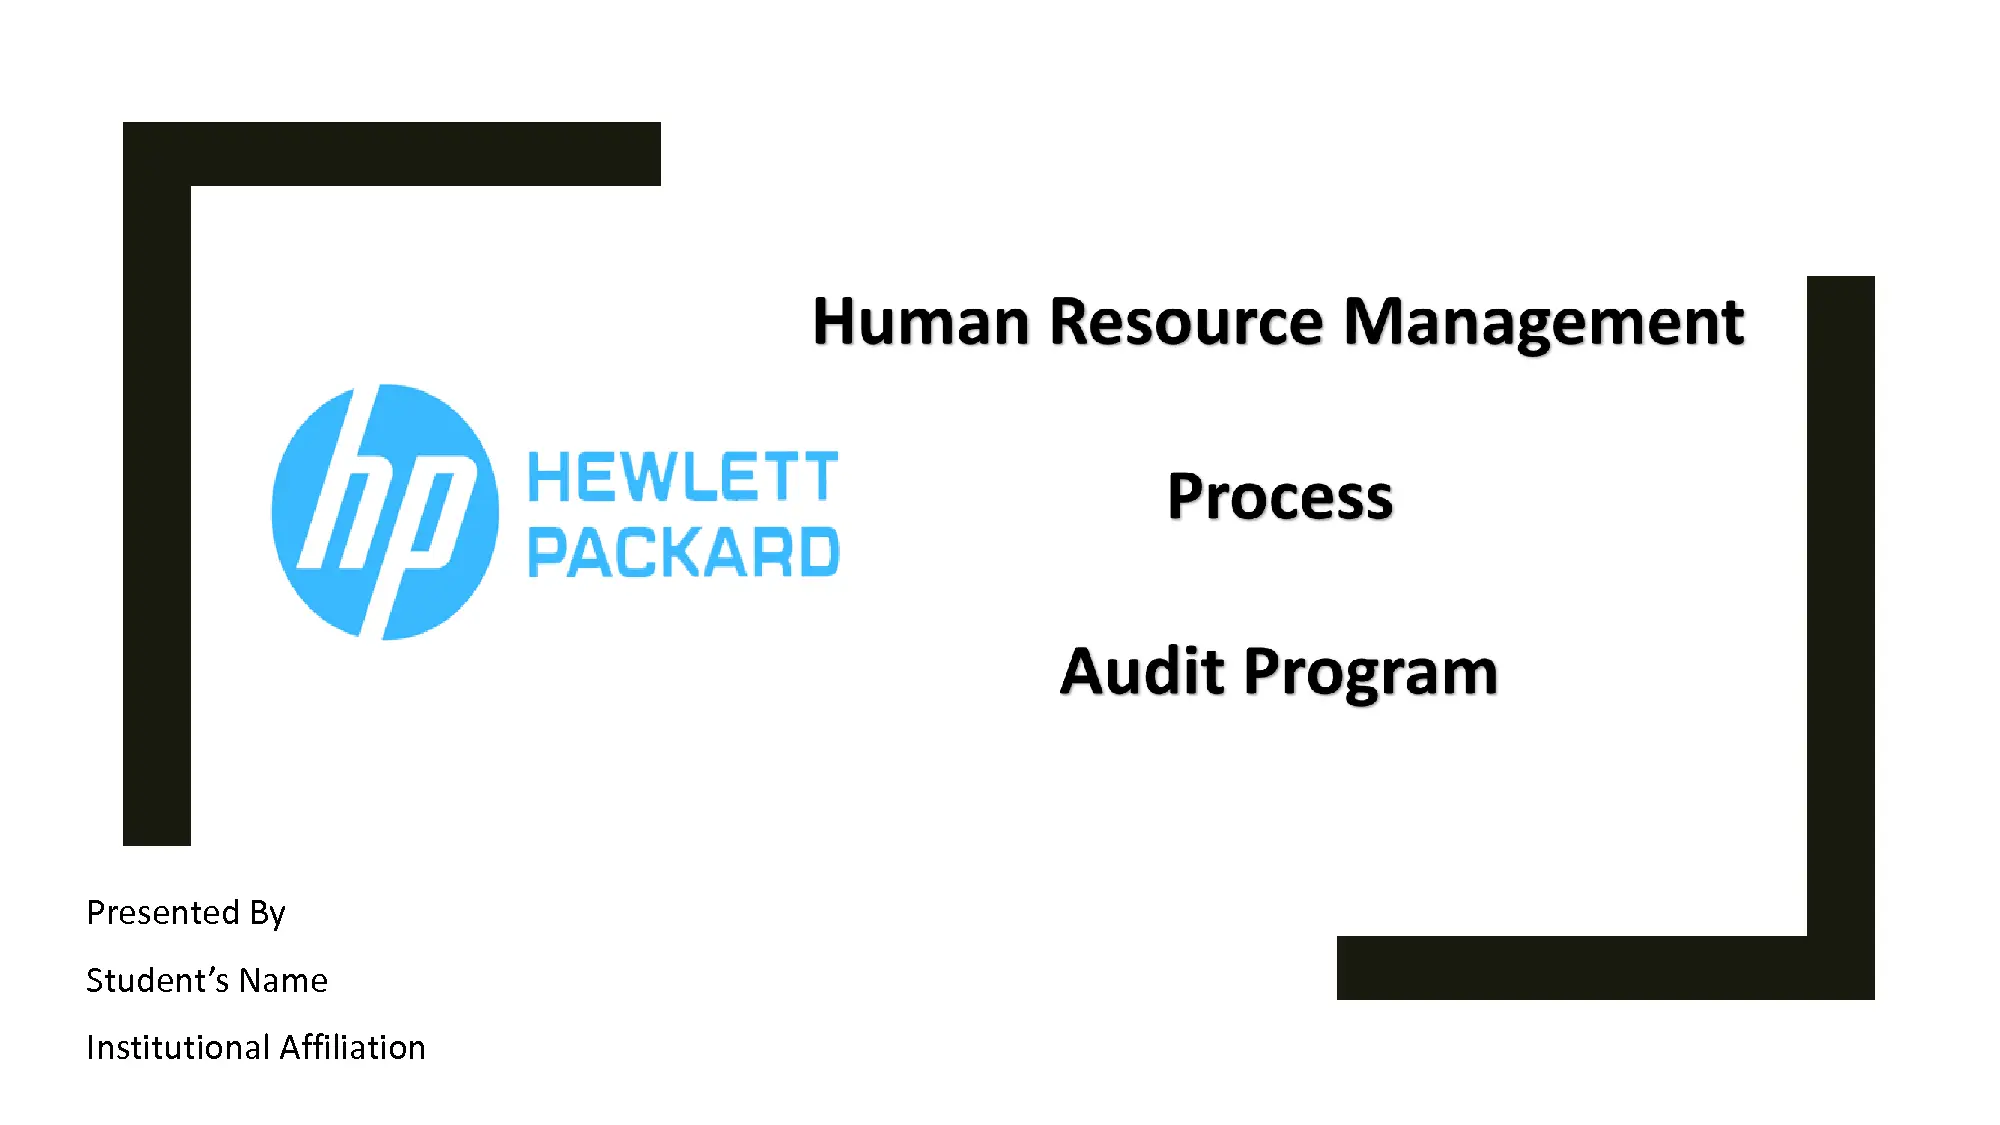 hewlett packard human resource - Is human resources customer service